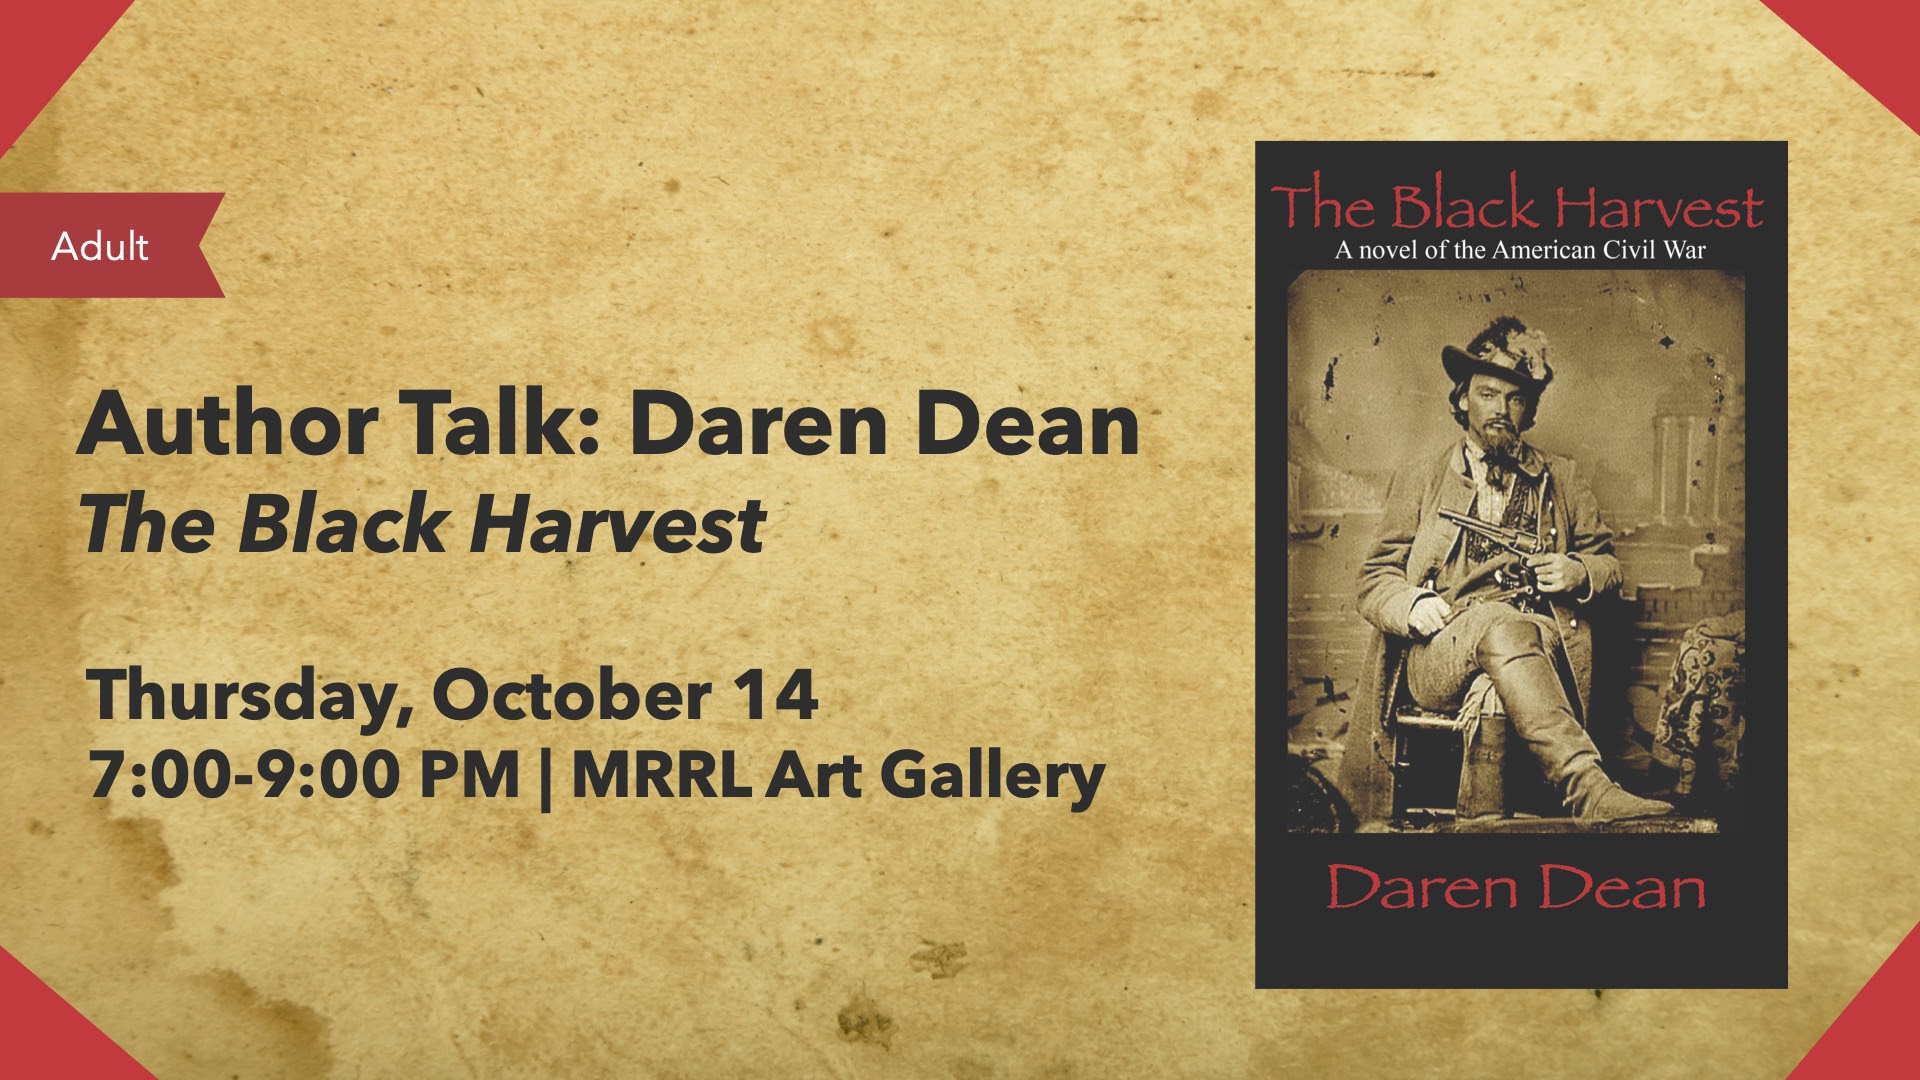 Daren Dean to talk about his book "The Black Harvest" Oct. 14.